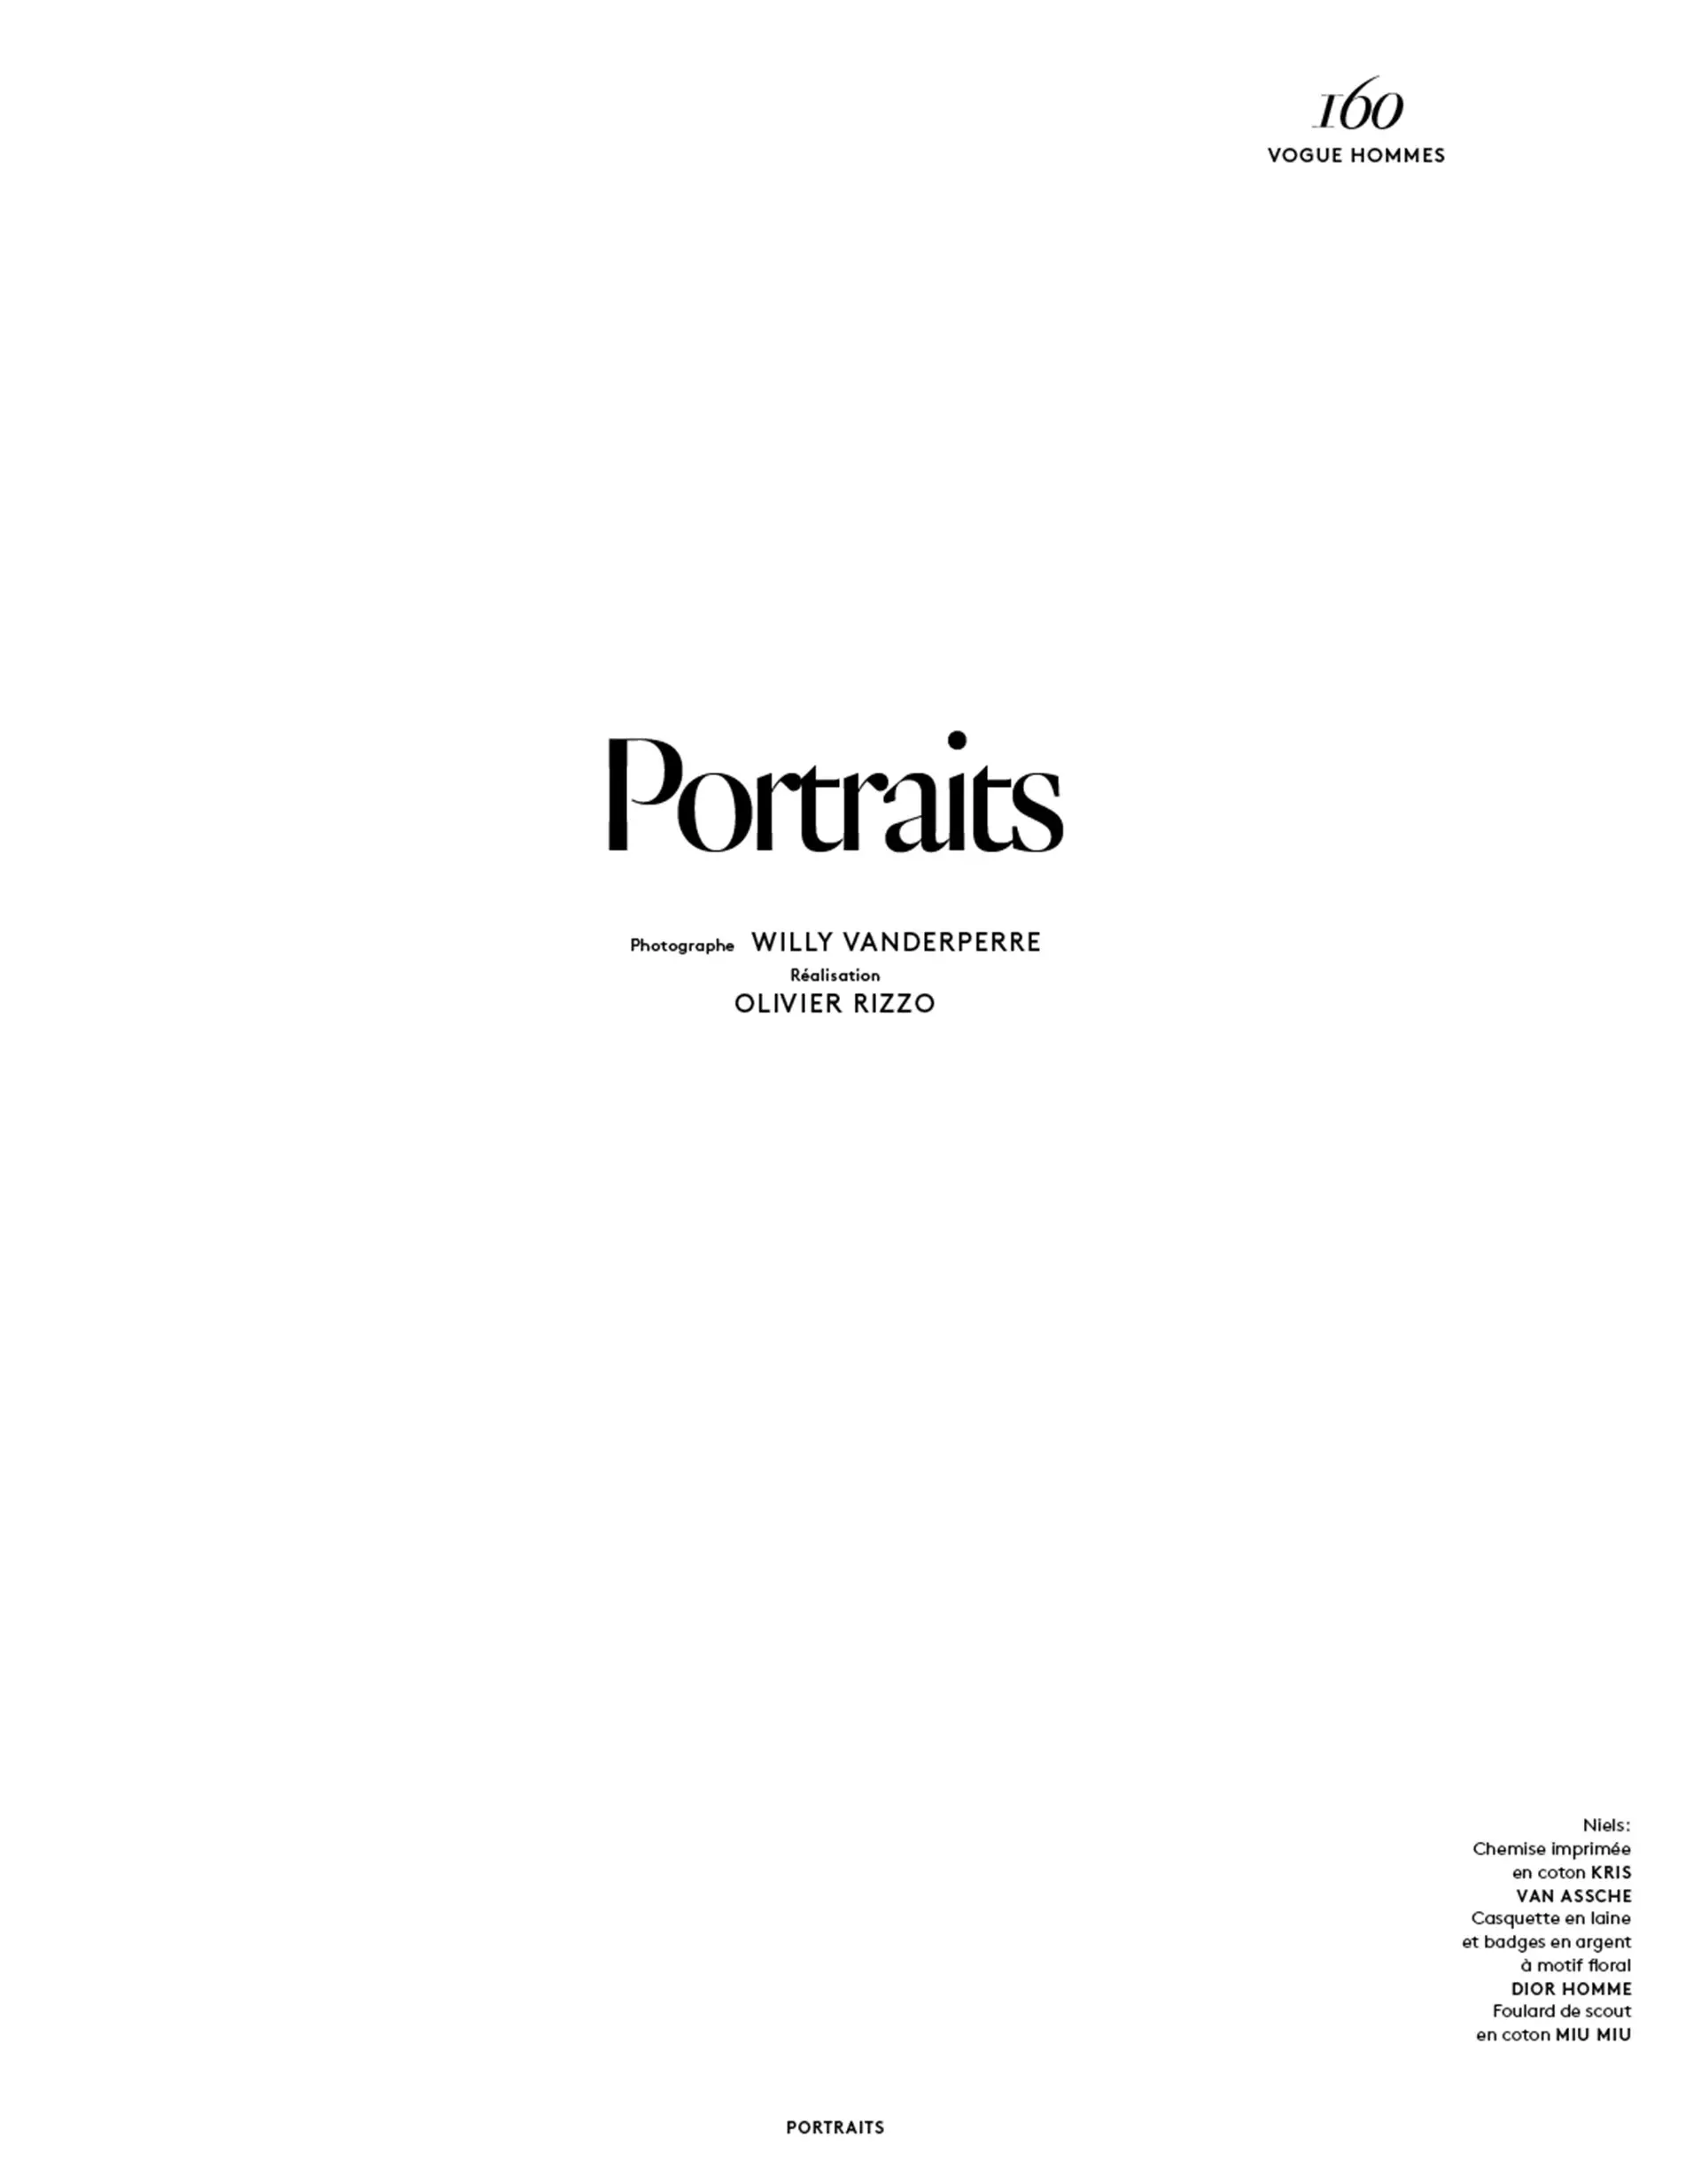 Vogue Hommes International S/S 2015: Portreti